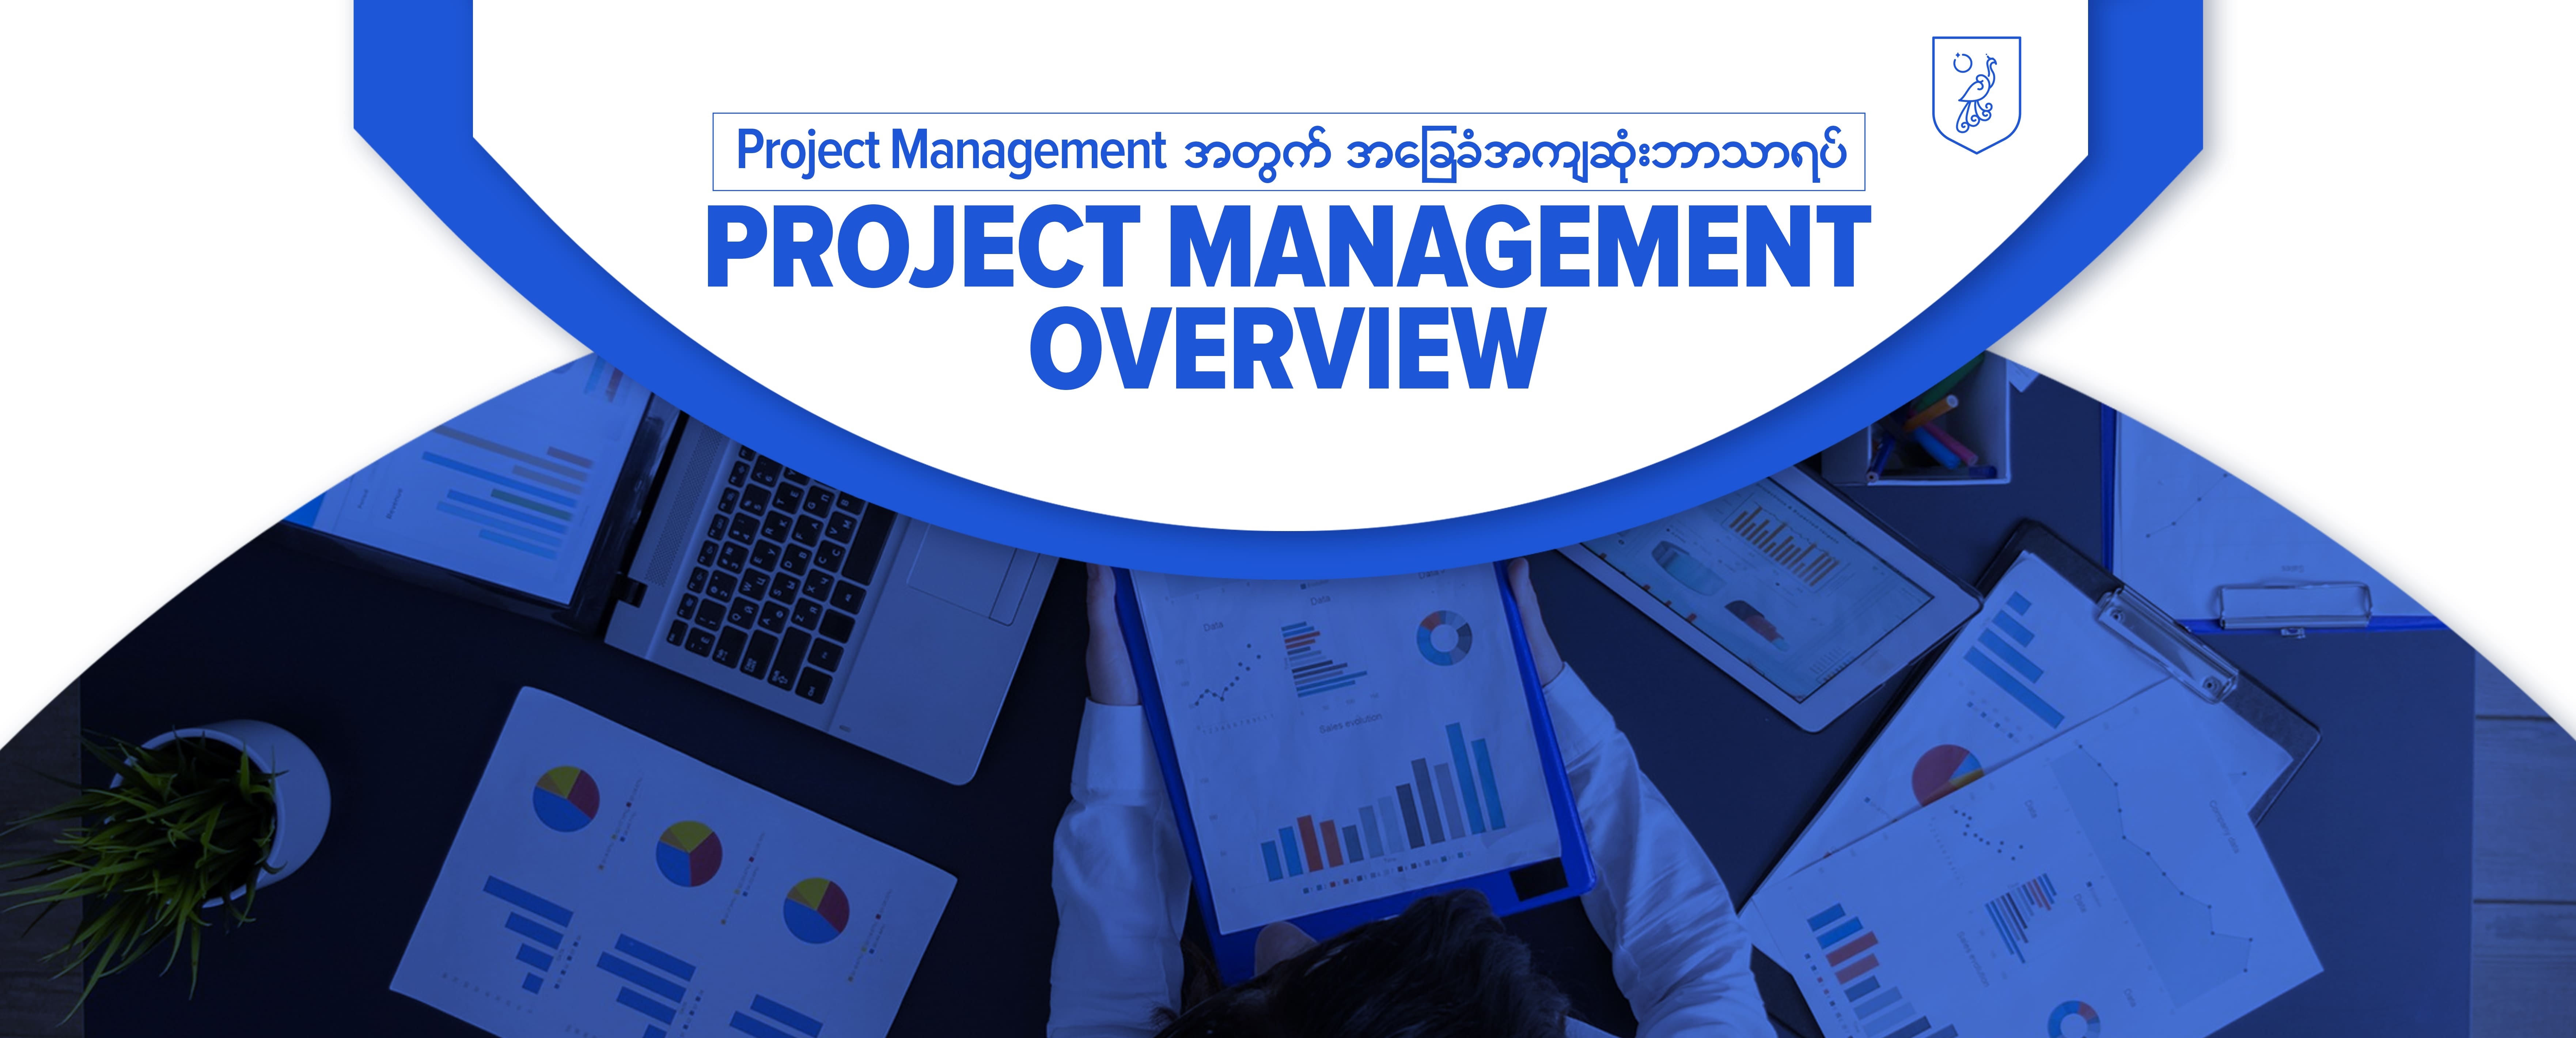 Project Management Overview BA005